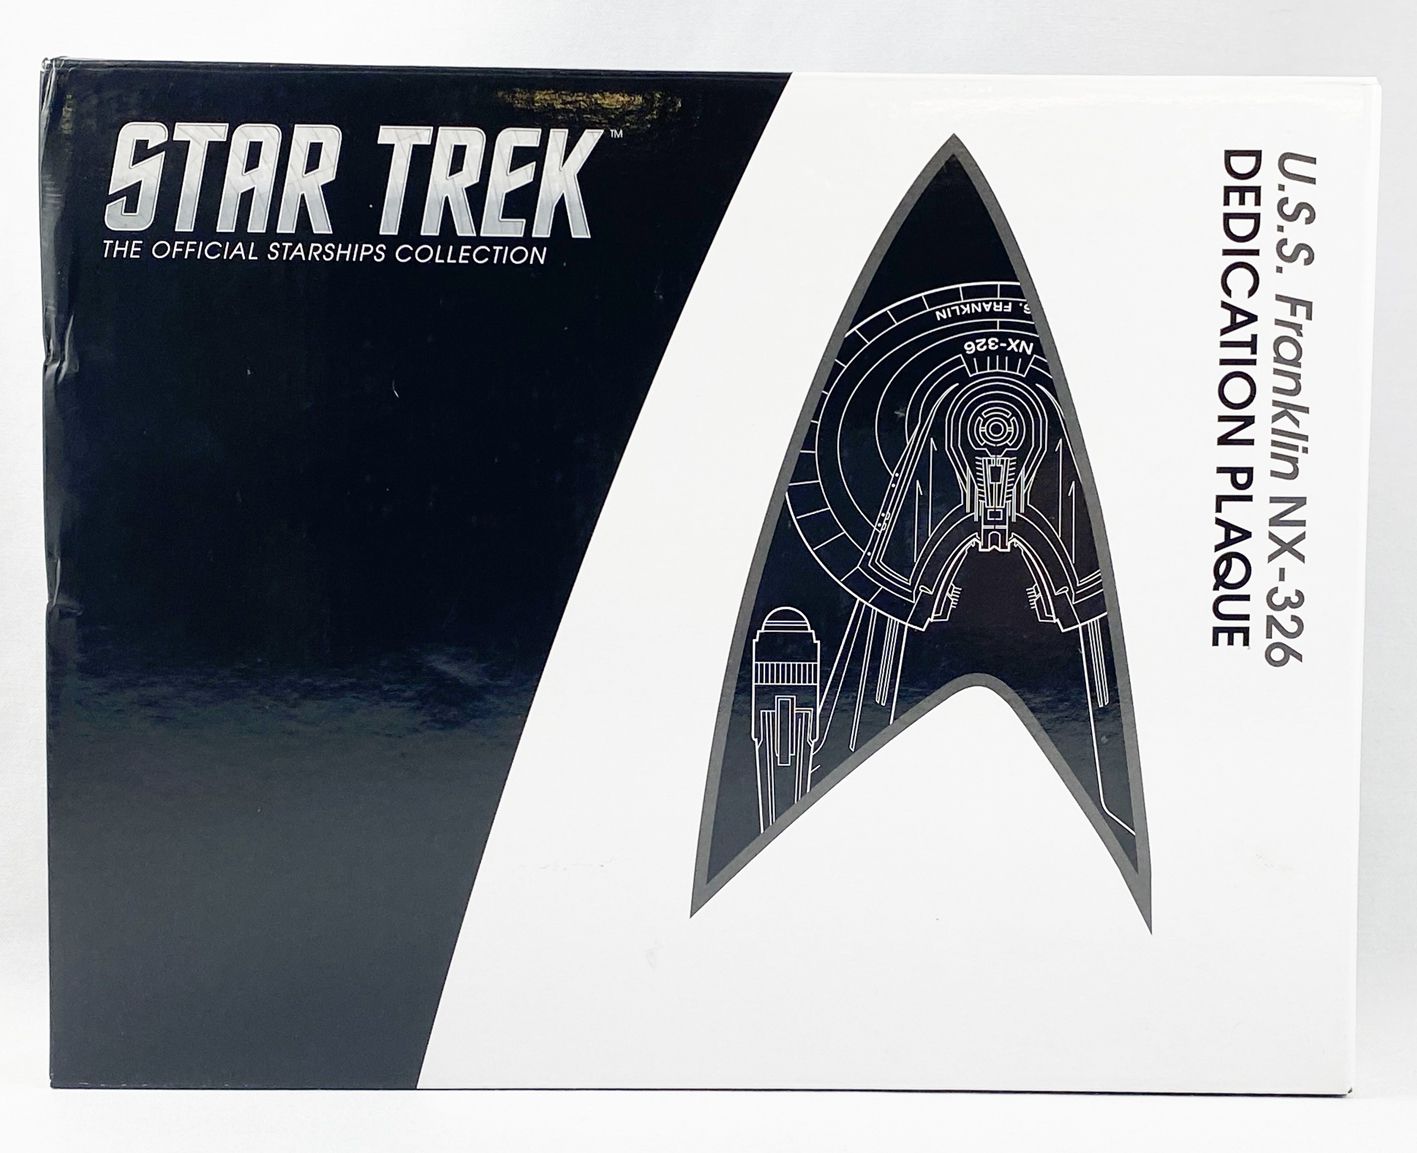 Eaglemoss metallic resin Star Trek Dedication Plaque U.S.S Franklin NX-326 